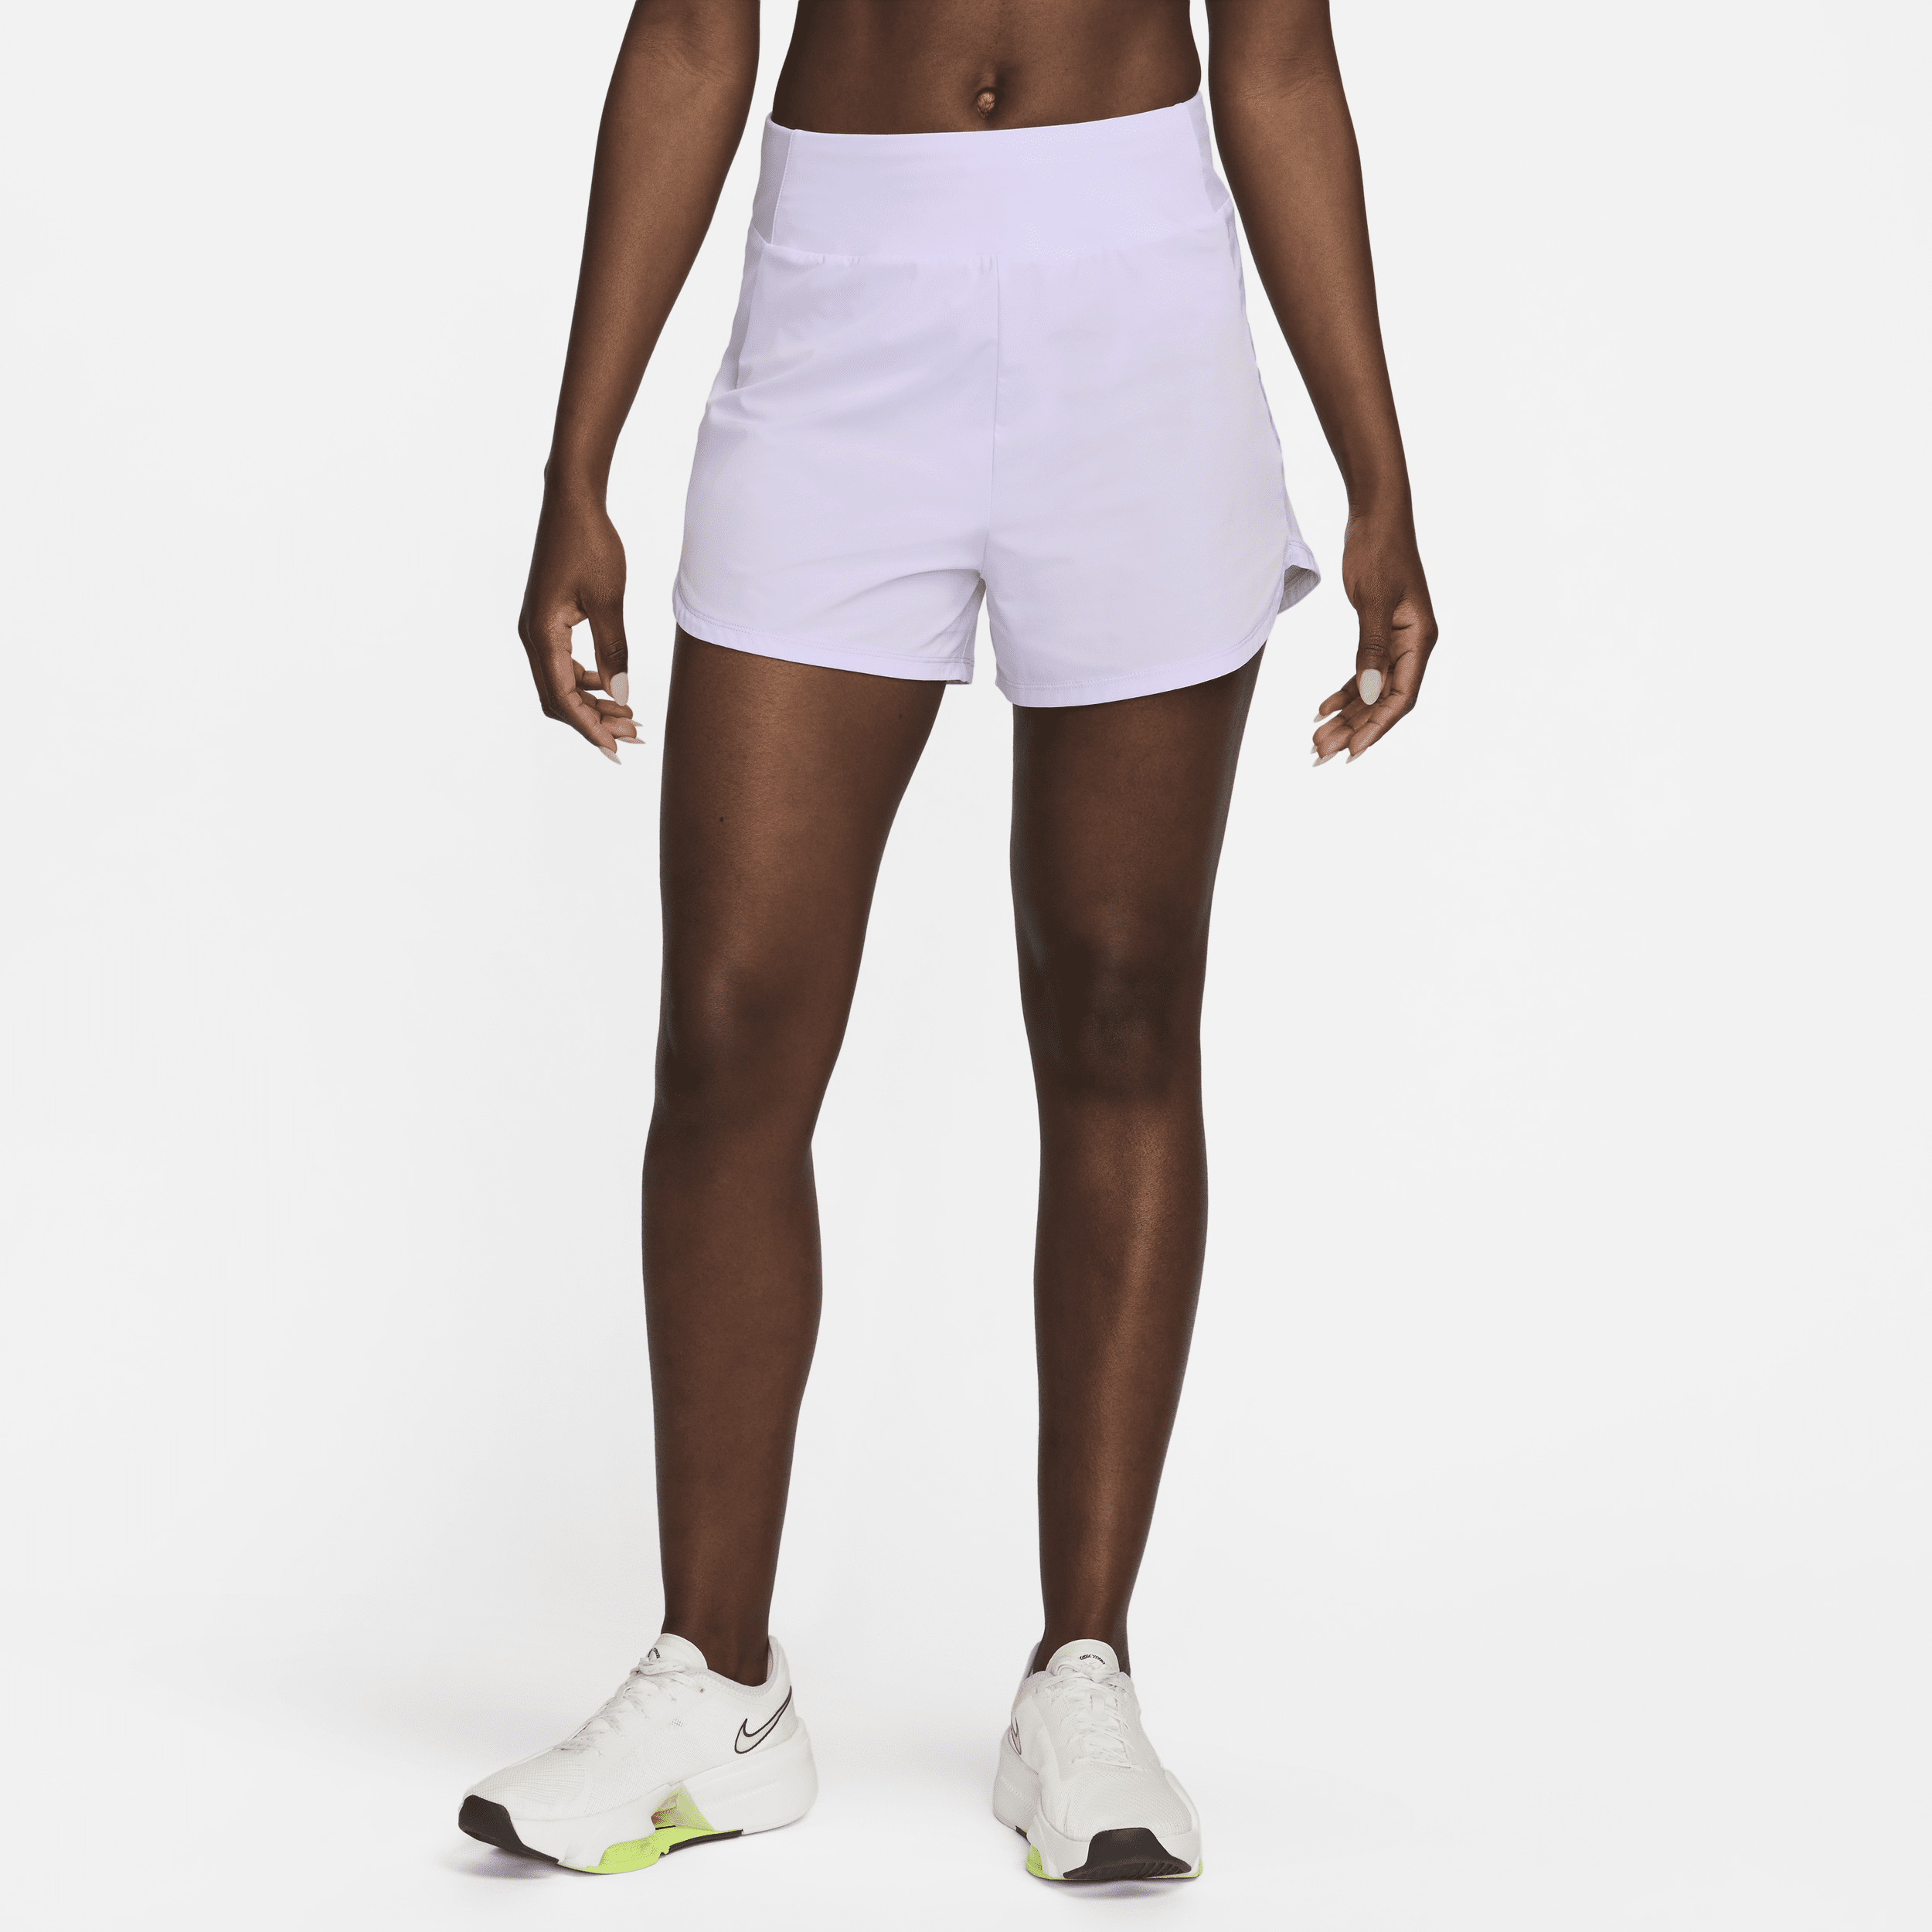 Shorts fitness Dri-FIT a vita alta con slip foderati 8 cm Nike Bliss – Donna - Viola